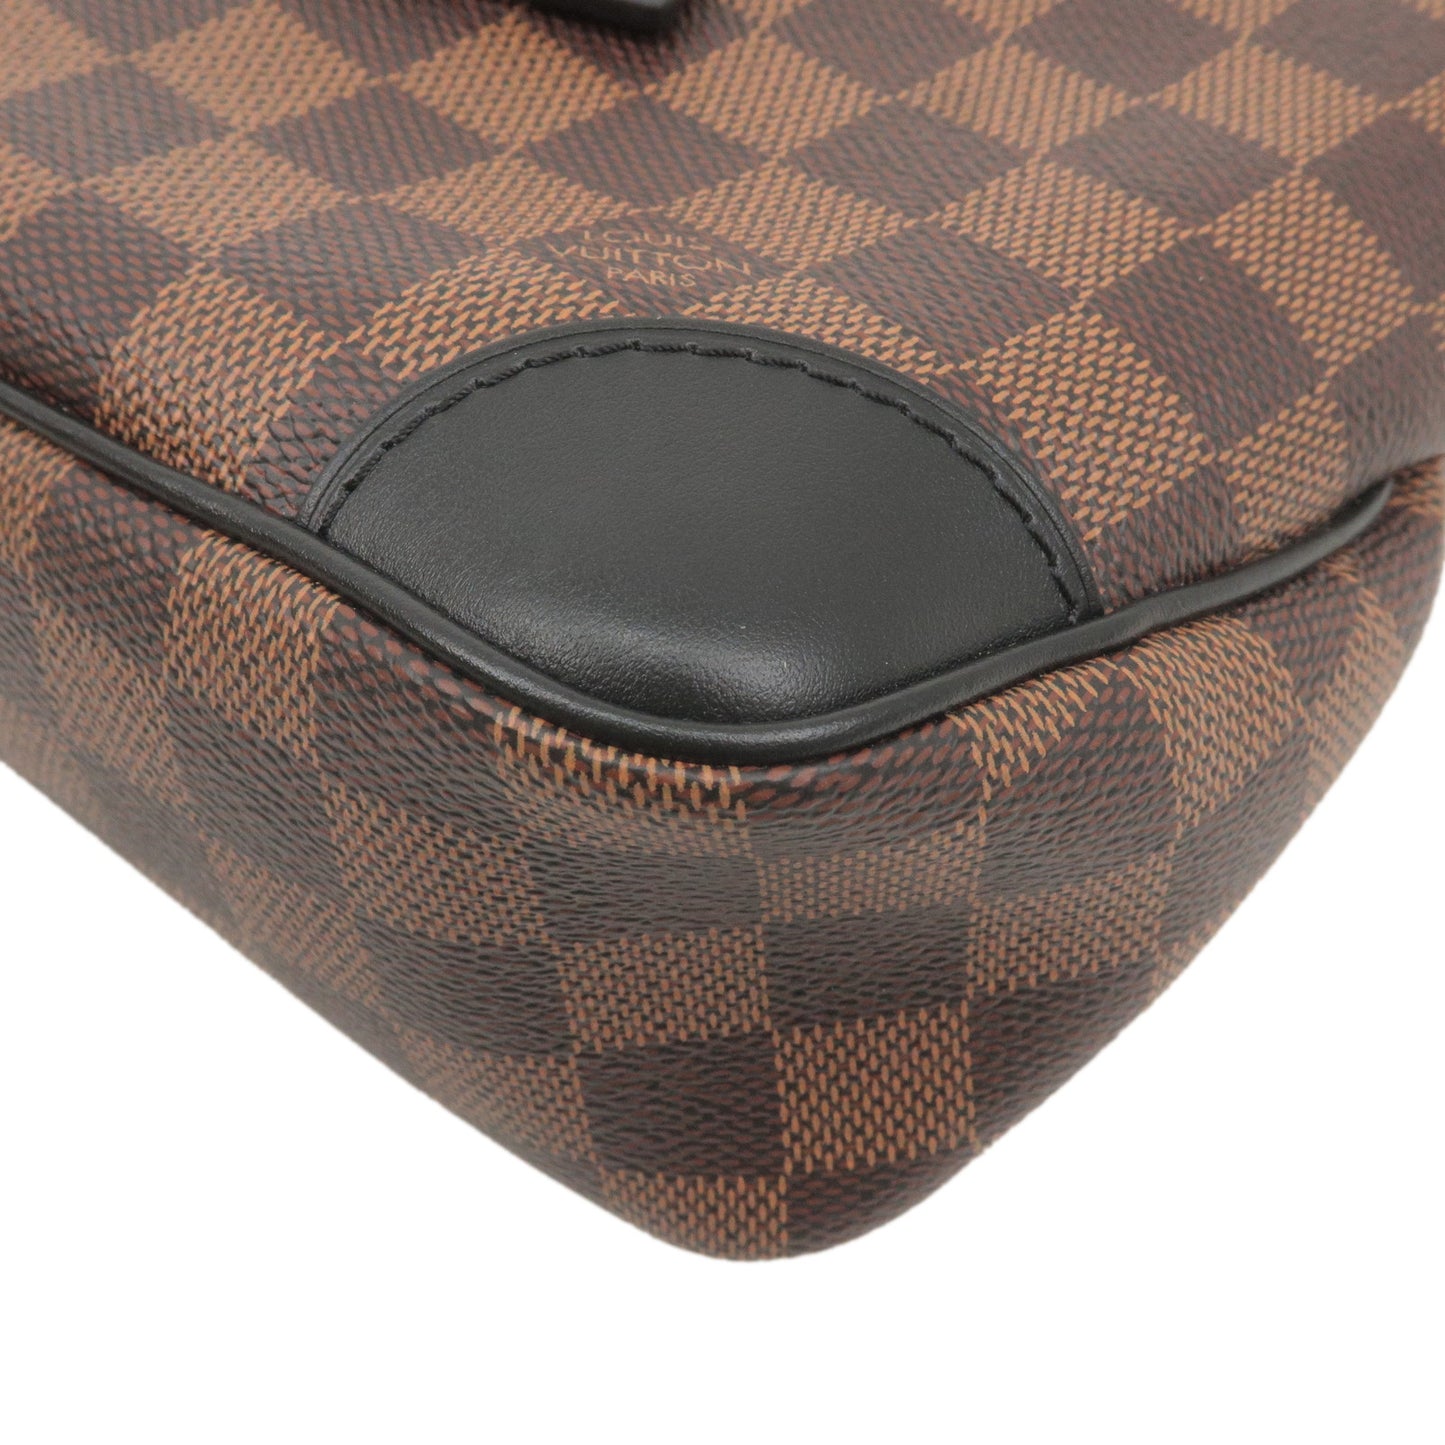 Louis Vuitton, Bags, Odeonnm Pm Damier Ebene Shoulder Bag